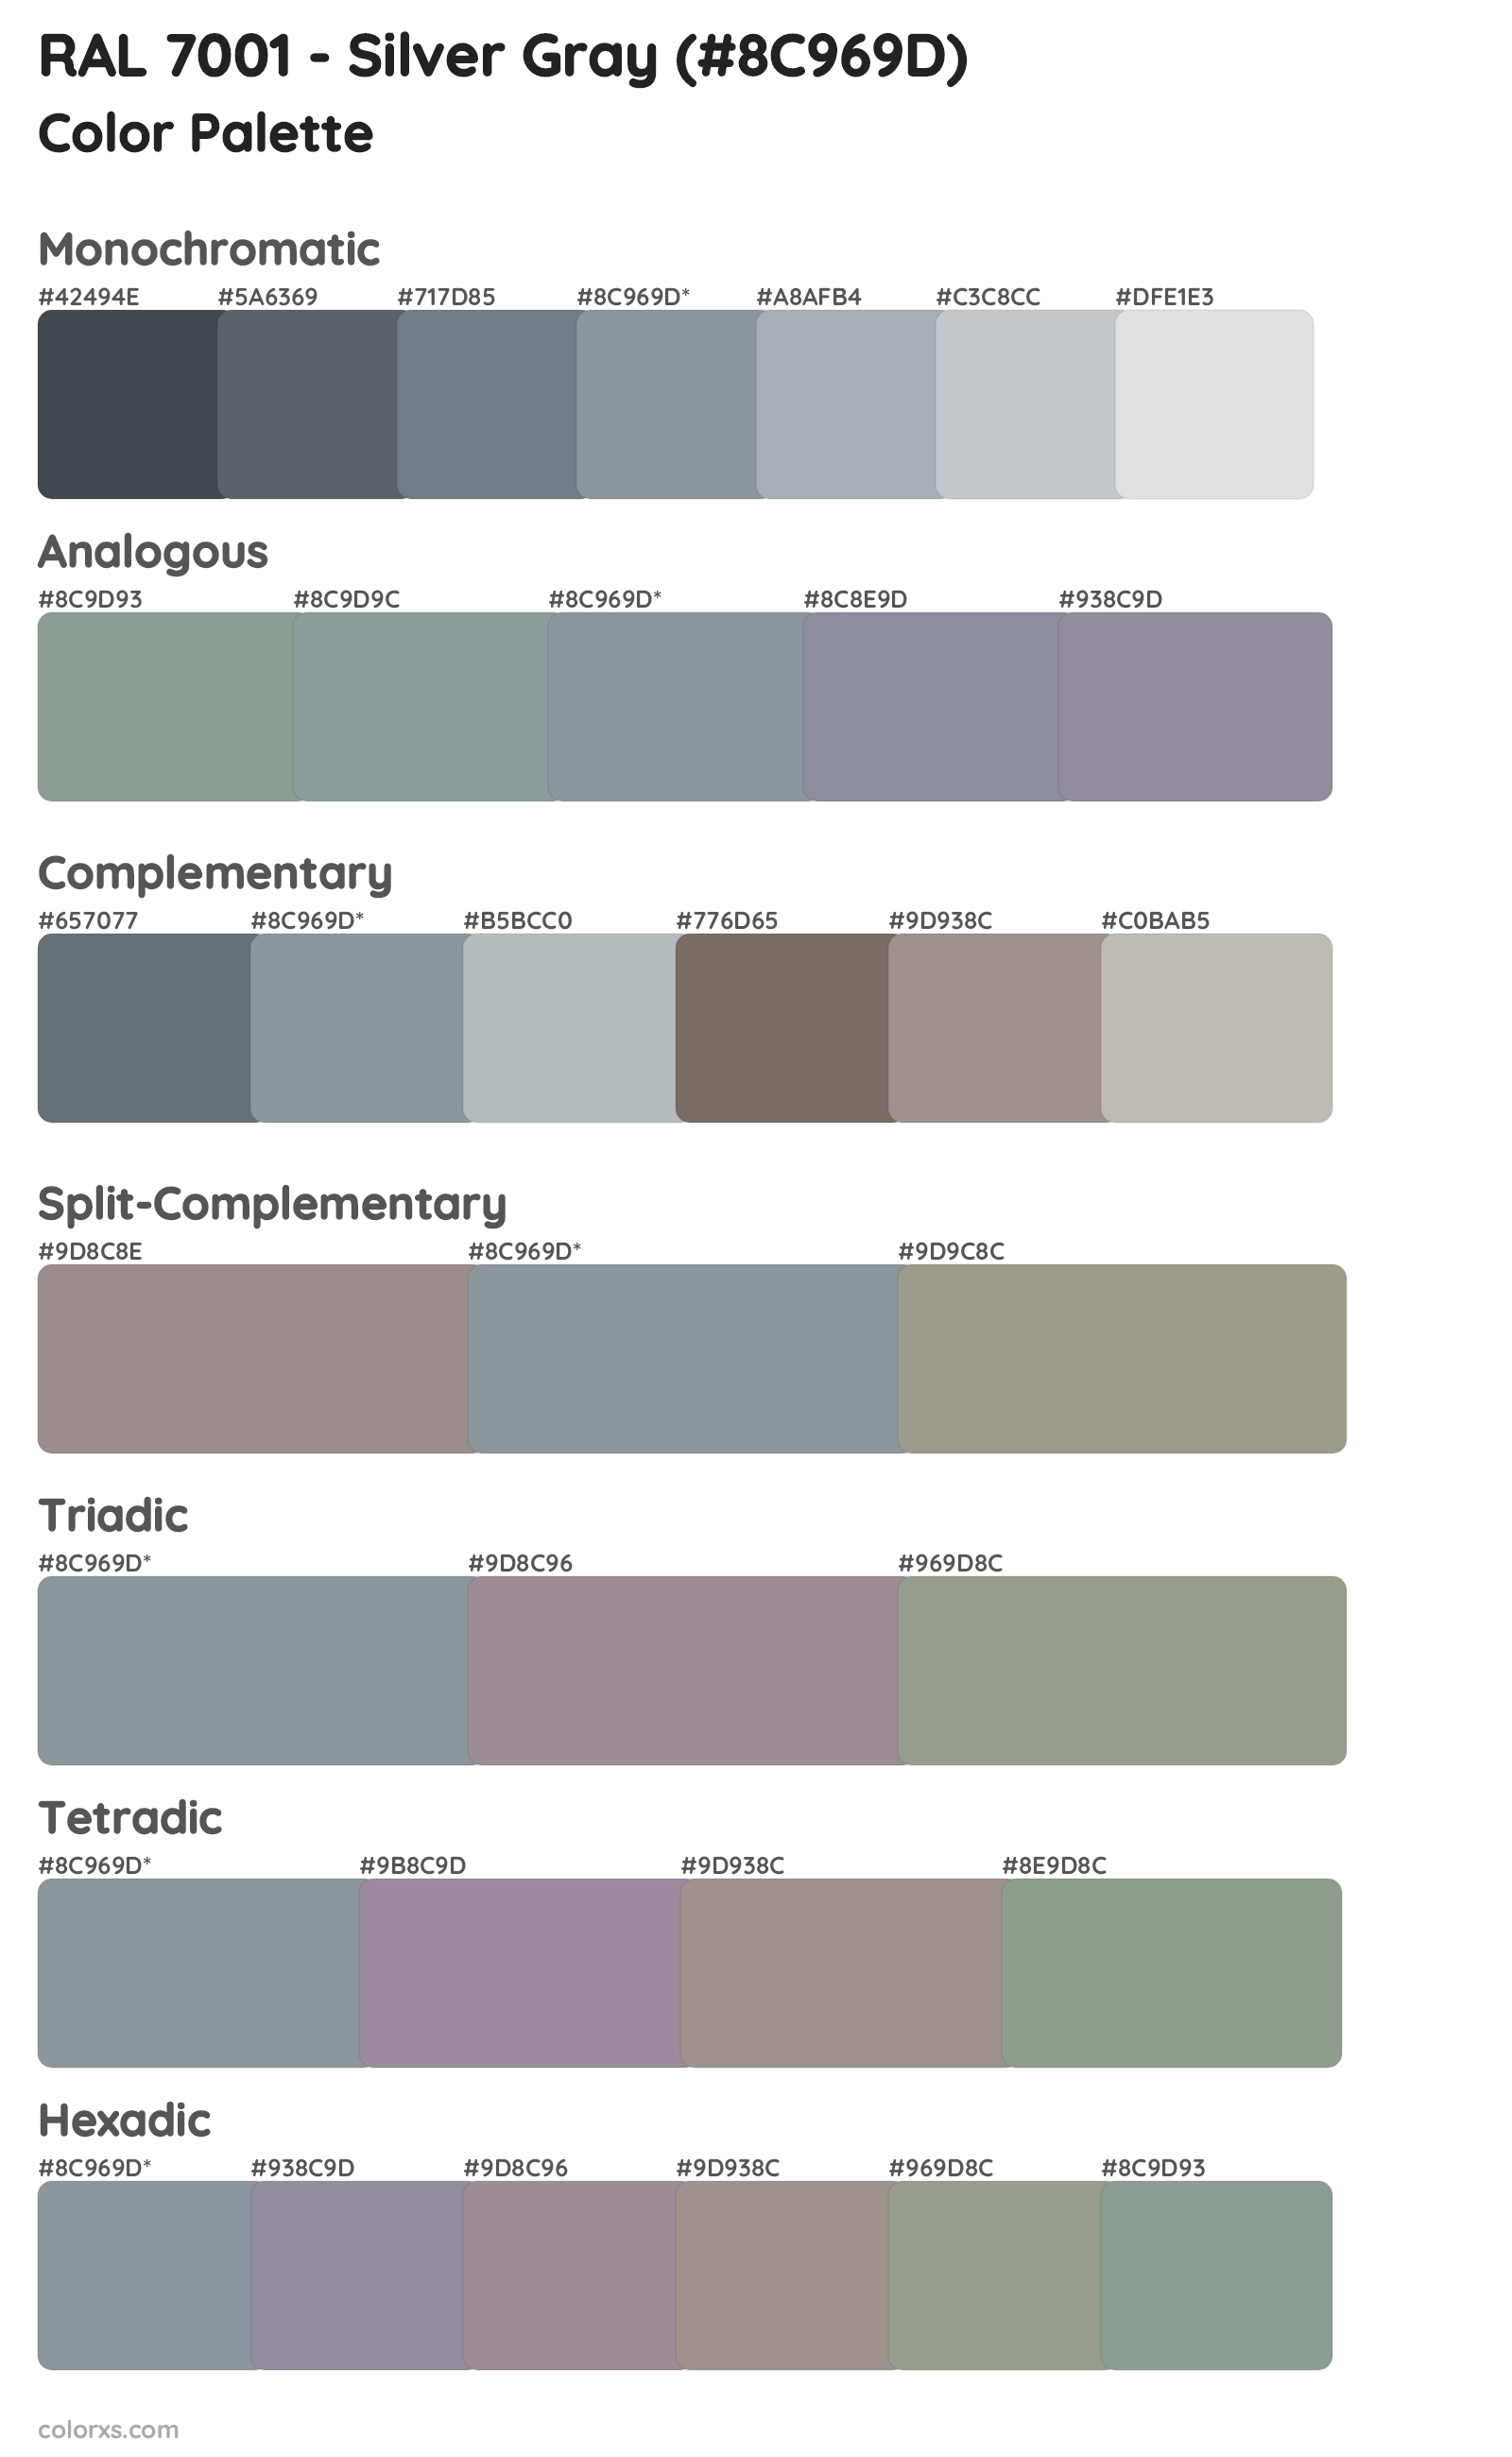 RAL 7001 - Silver Gray Color Scheme Palettes